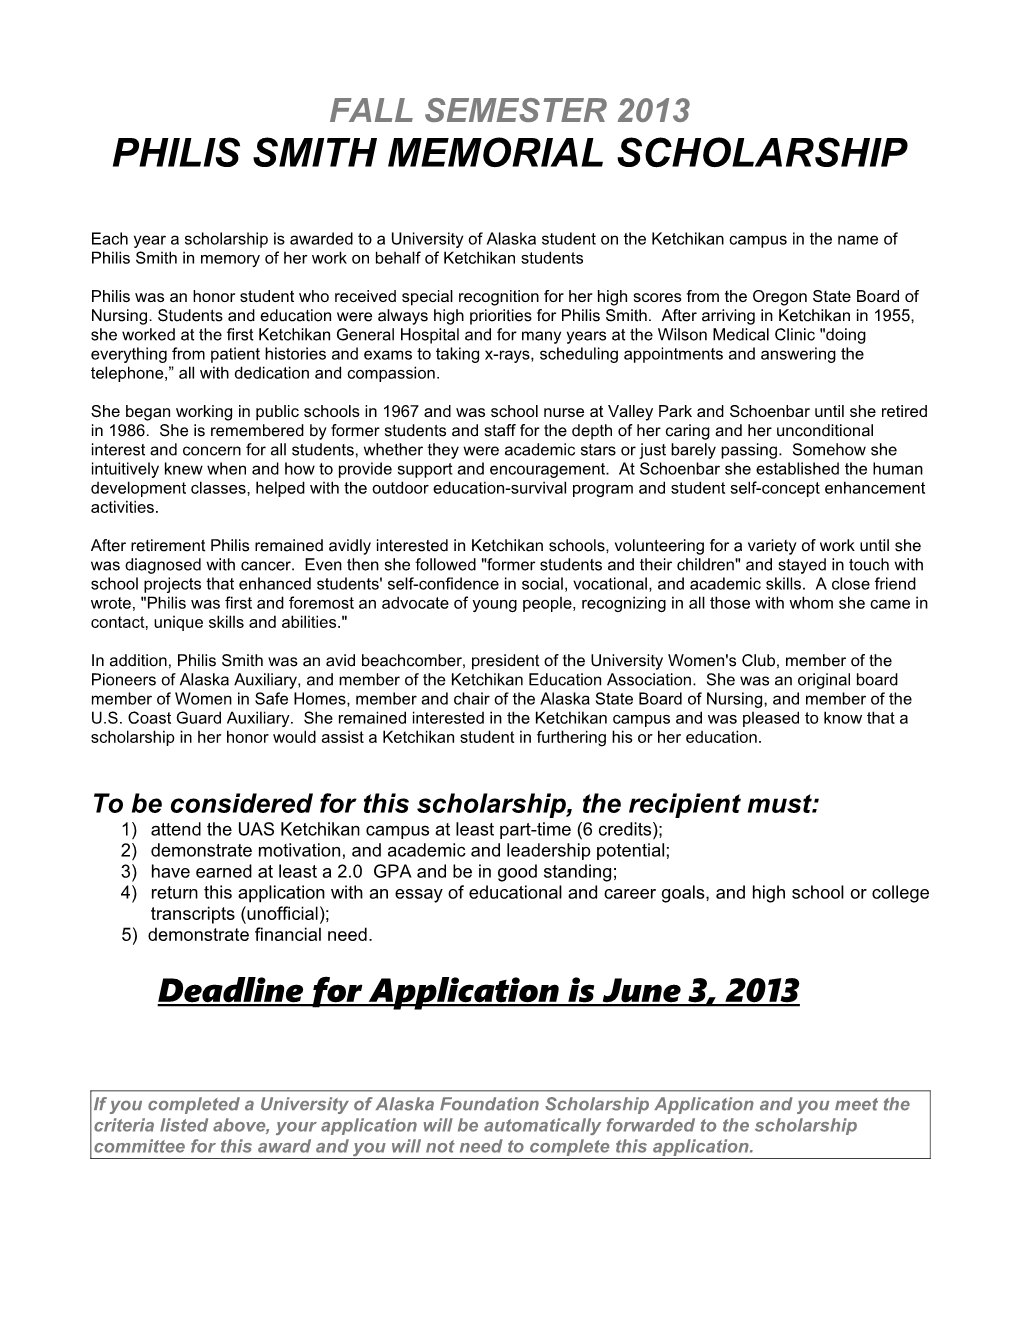 Philis Smith Memorial Scholarship